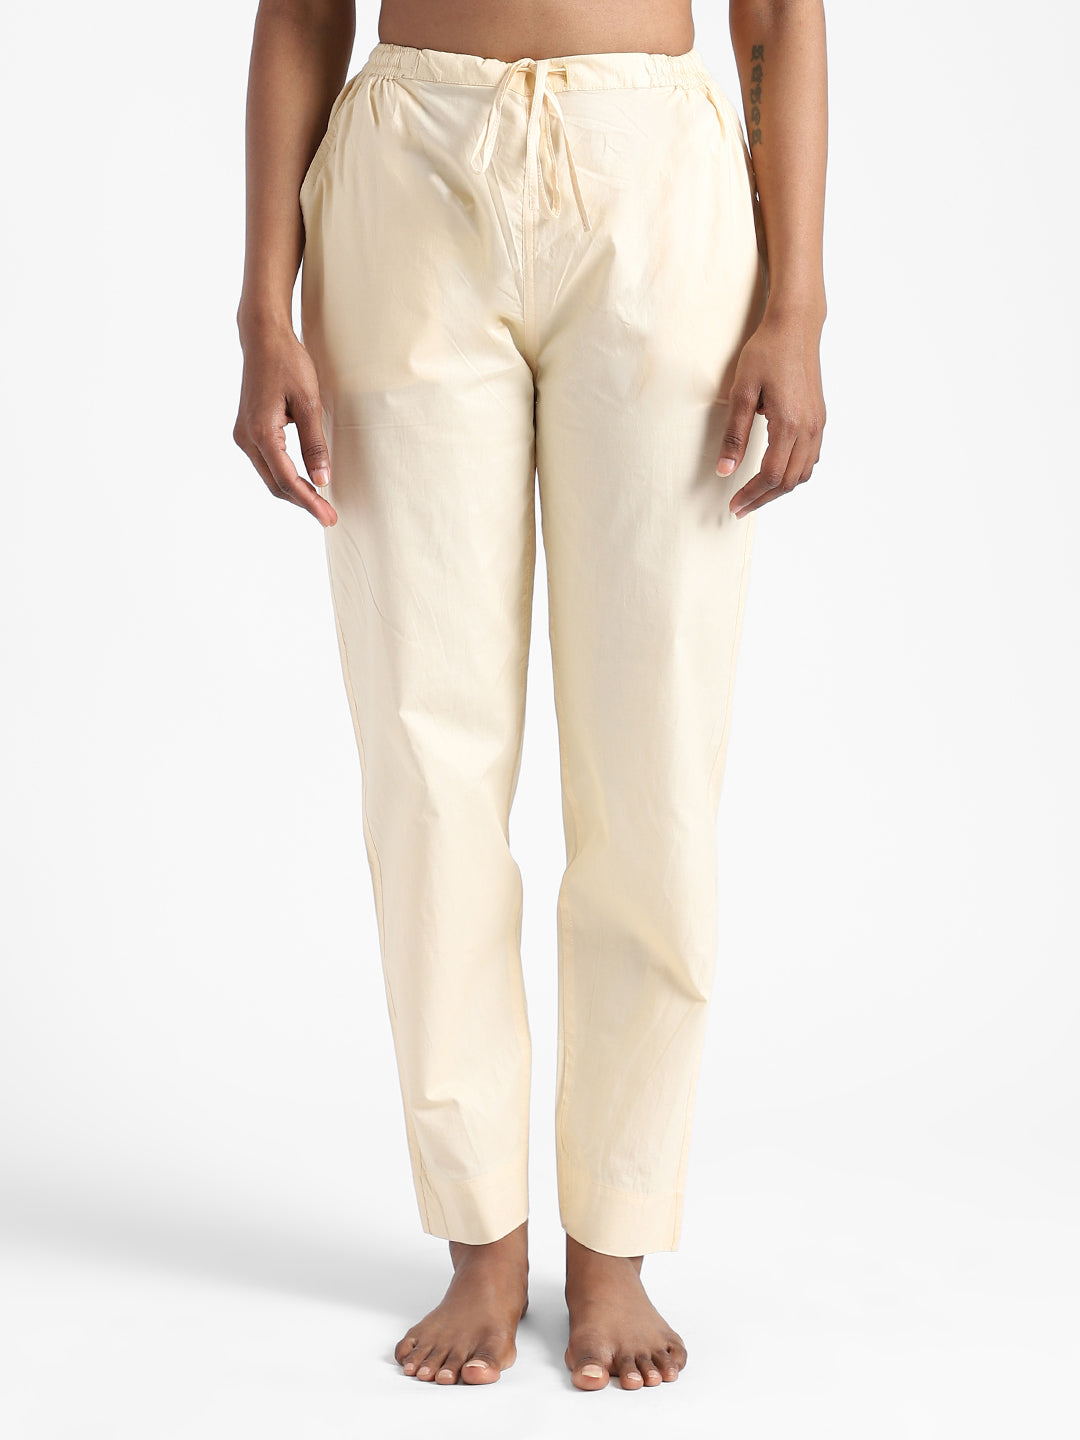 Buy Online Indigo Cotton And Lycra Pants for Women  Girls at Best Prices  in Biba IndiaINDIGO15259